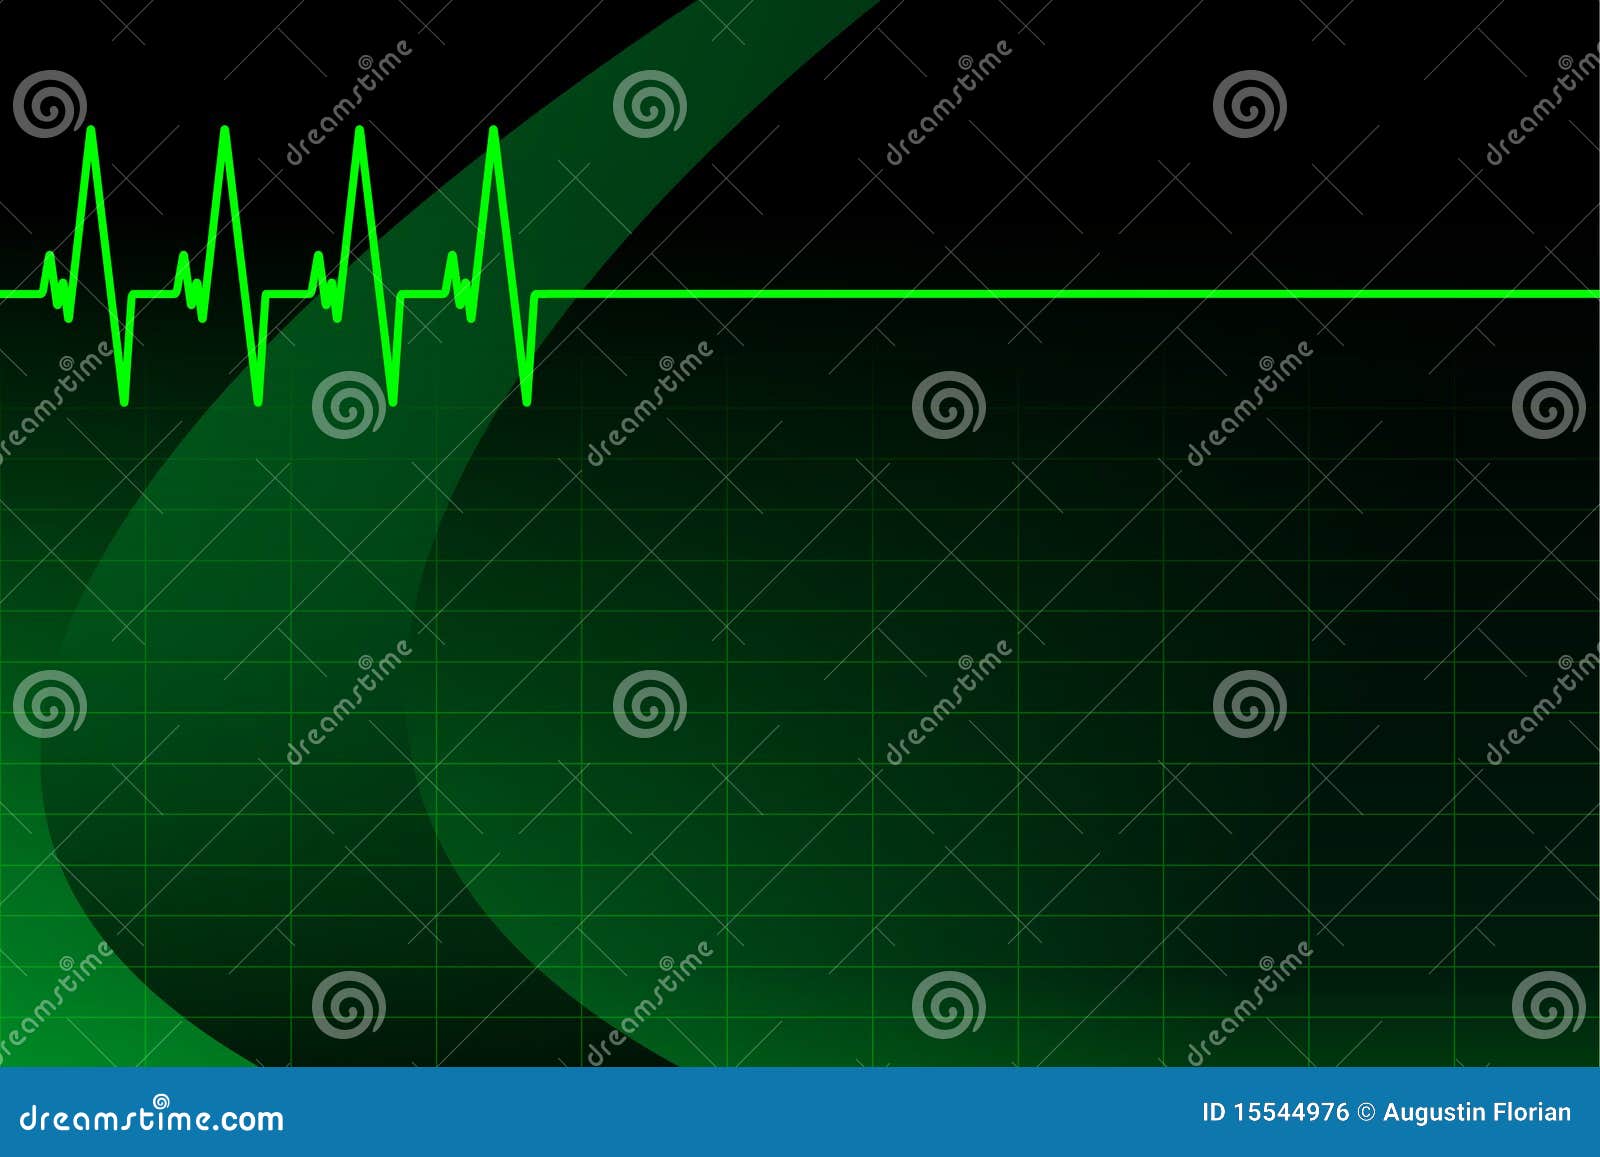 presentation vector black Background/business ECG/EKG Card Stock Image  Vector